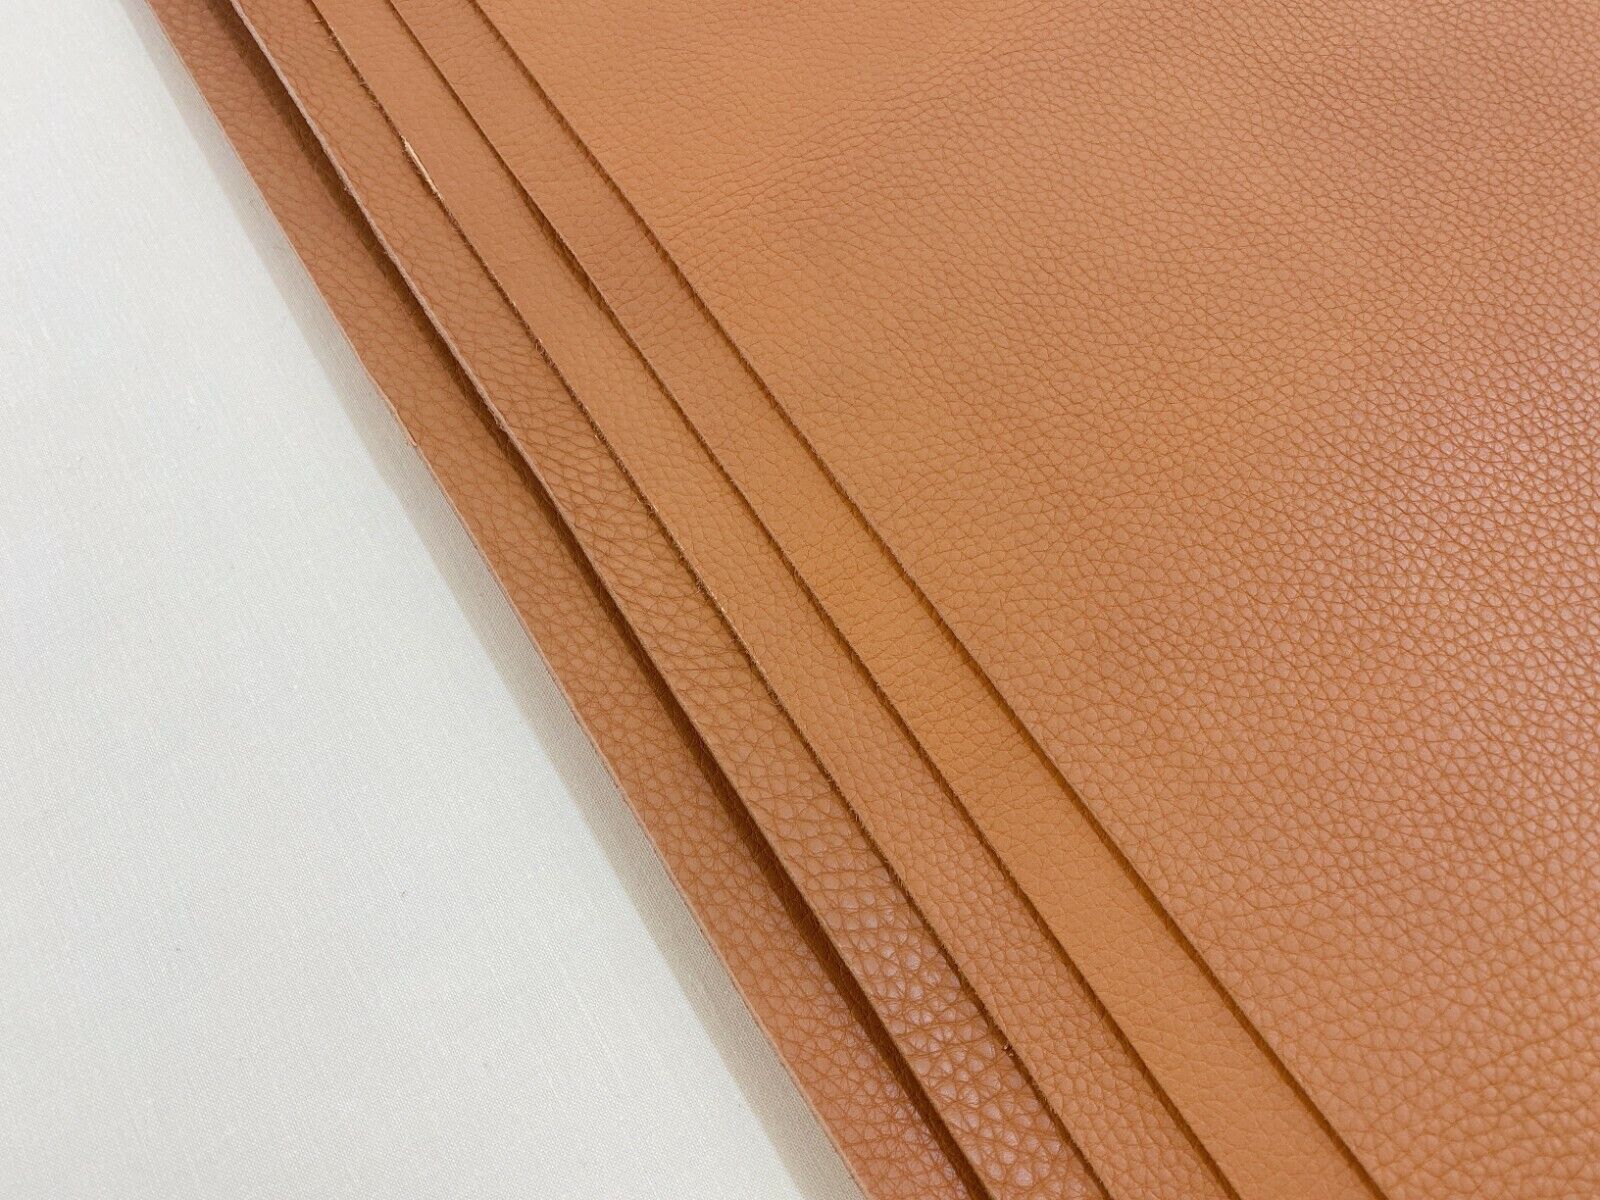 1.8 - 2mm thick dyed veg tan leather craft - light caramel & irregular shape 2022 Onmiddellijke levering